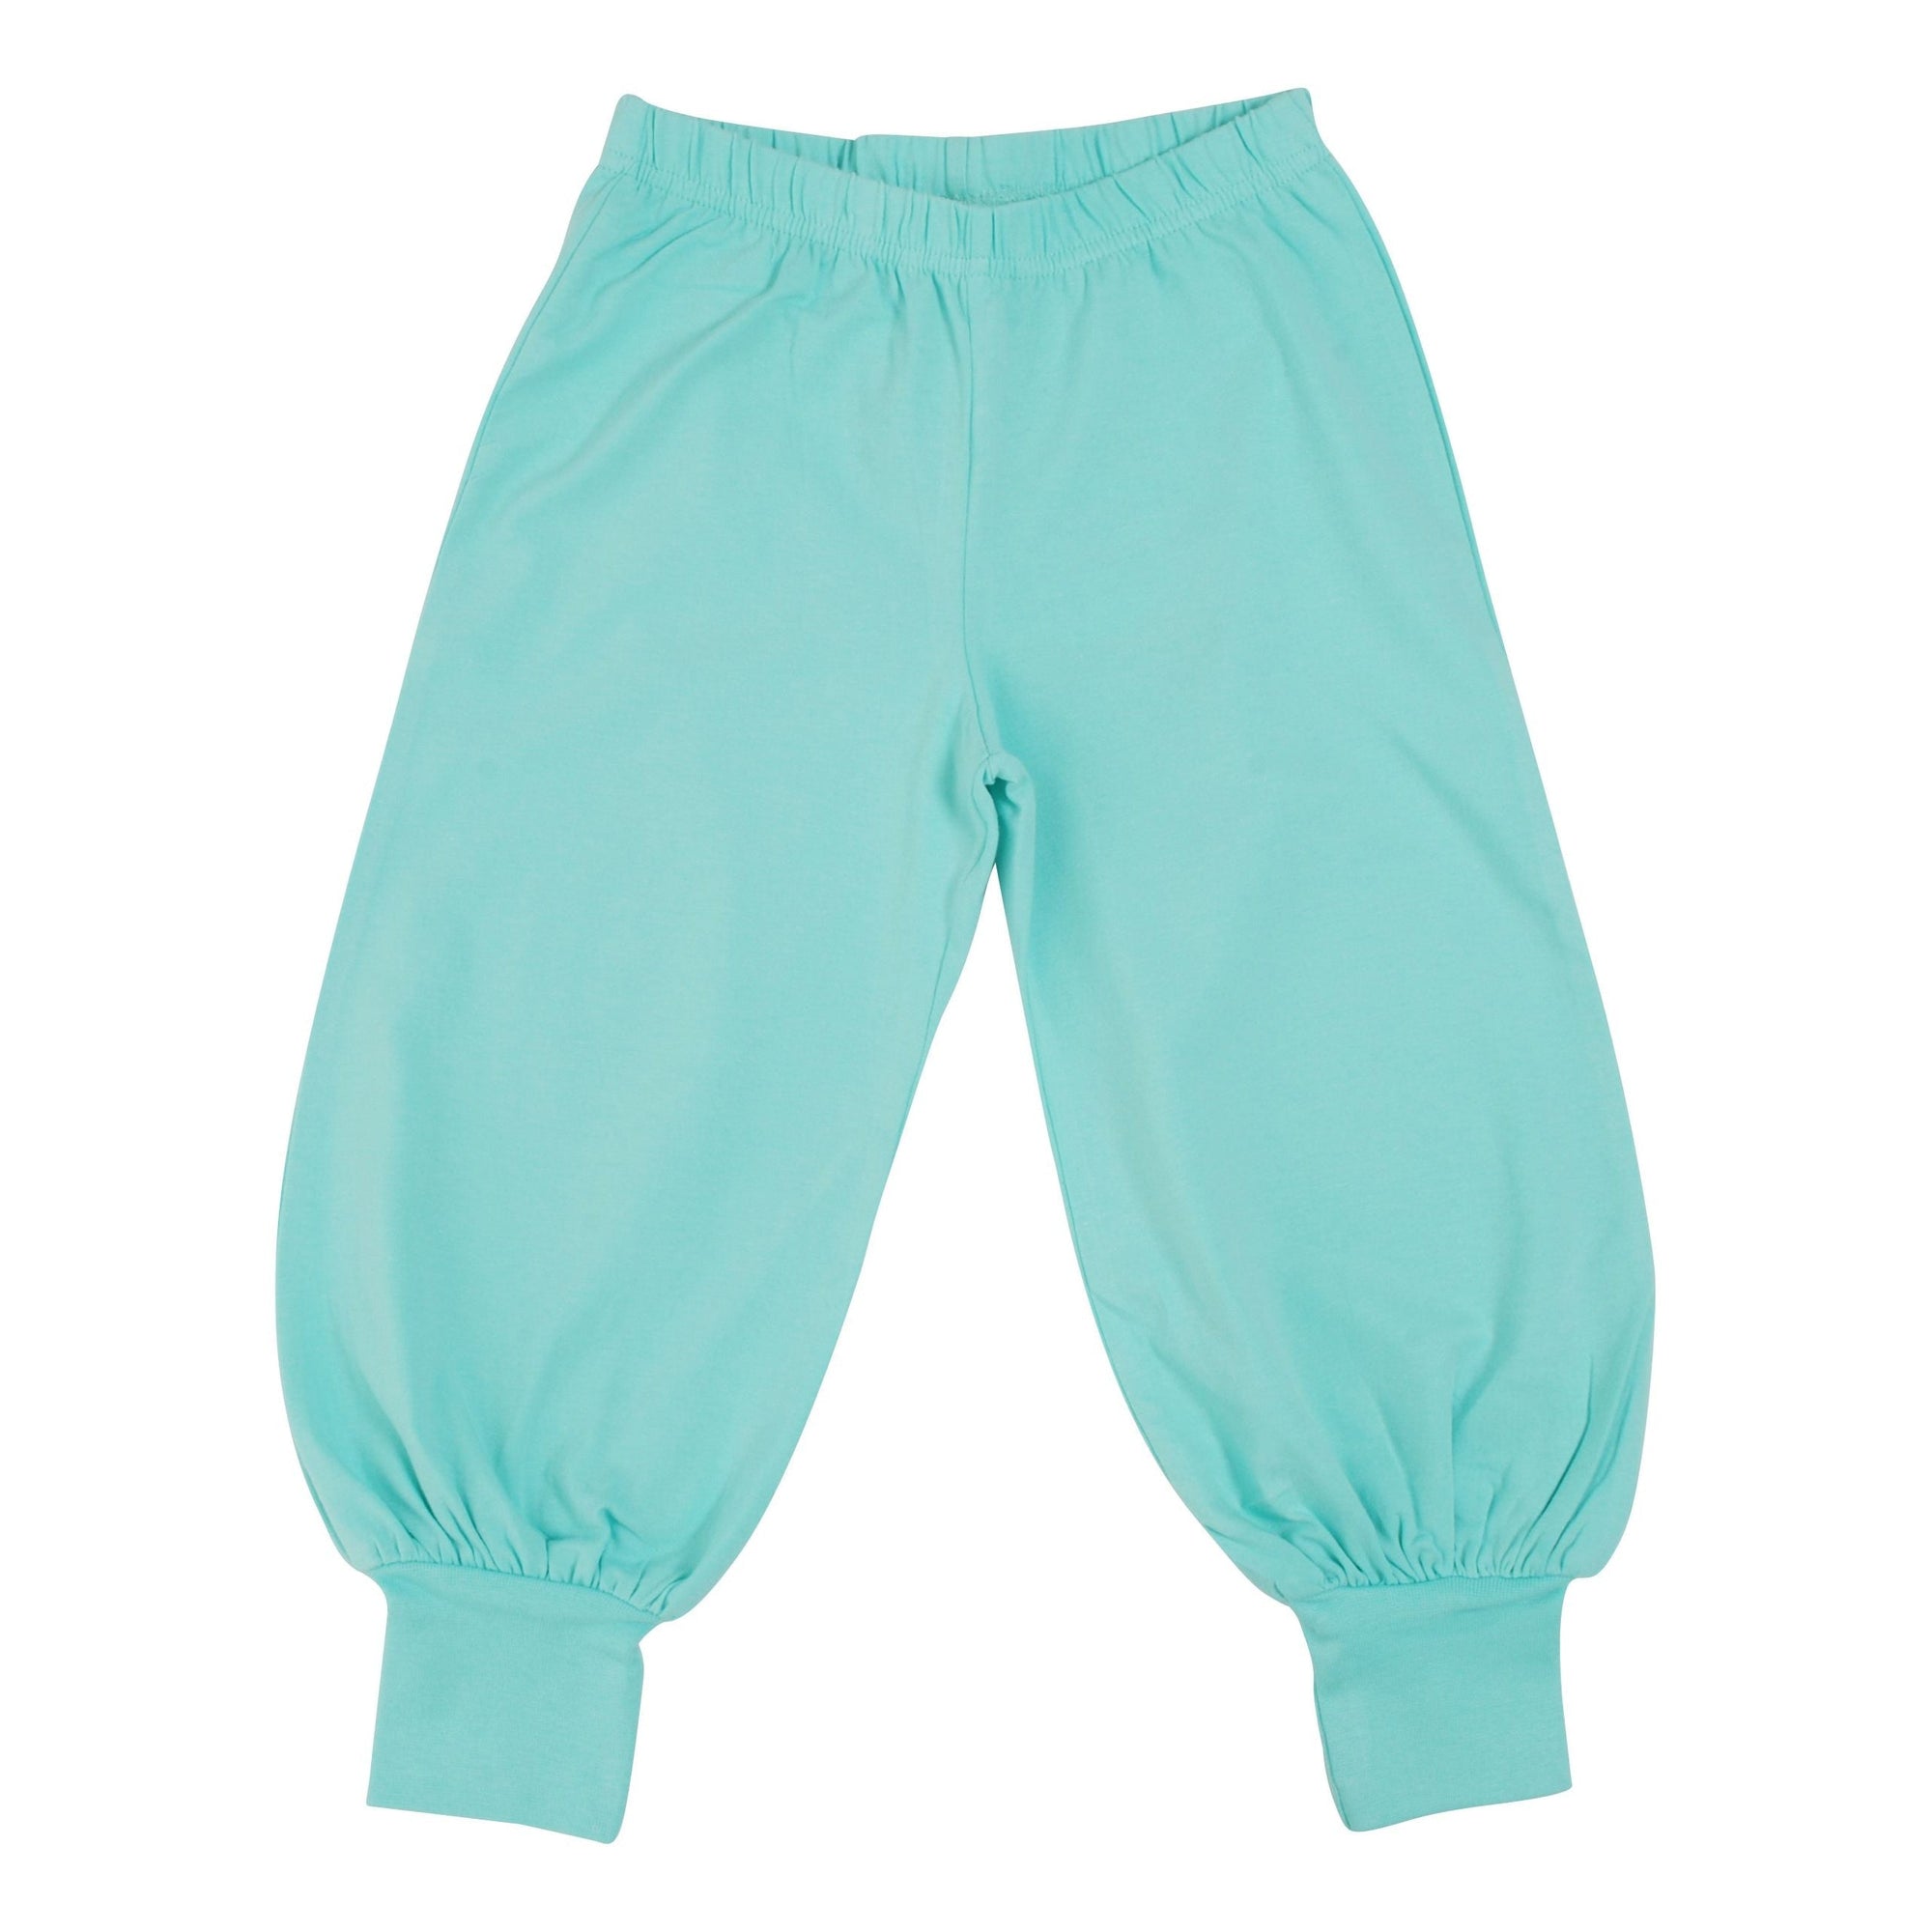 Aqua Sky Baggy Pants - 2 Left Size 8-10 & 12-14 years-More Than A Fling-Modern Rascals